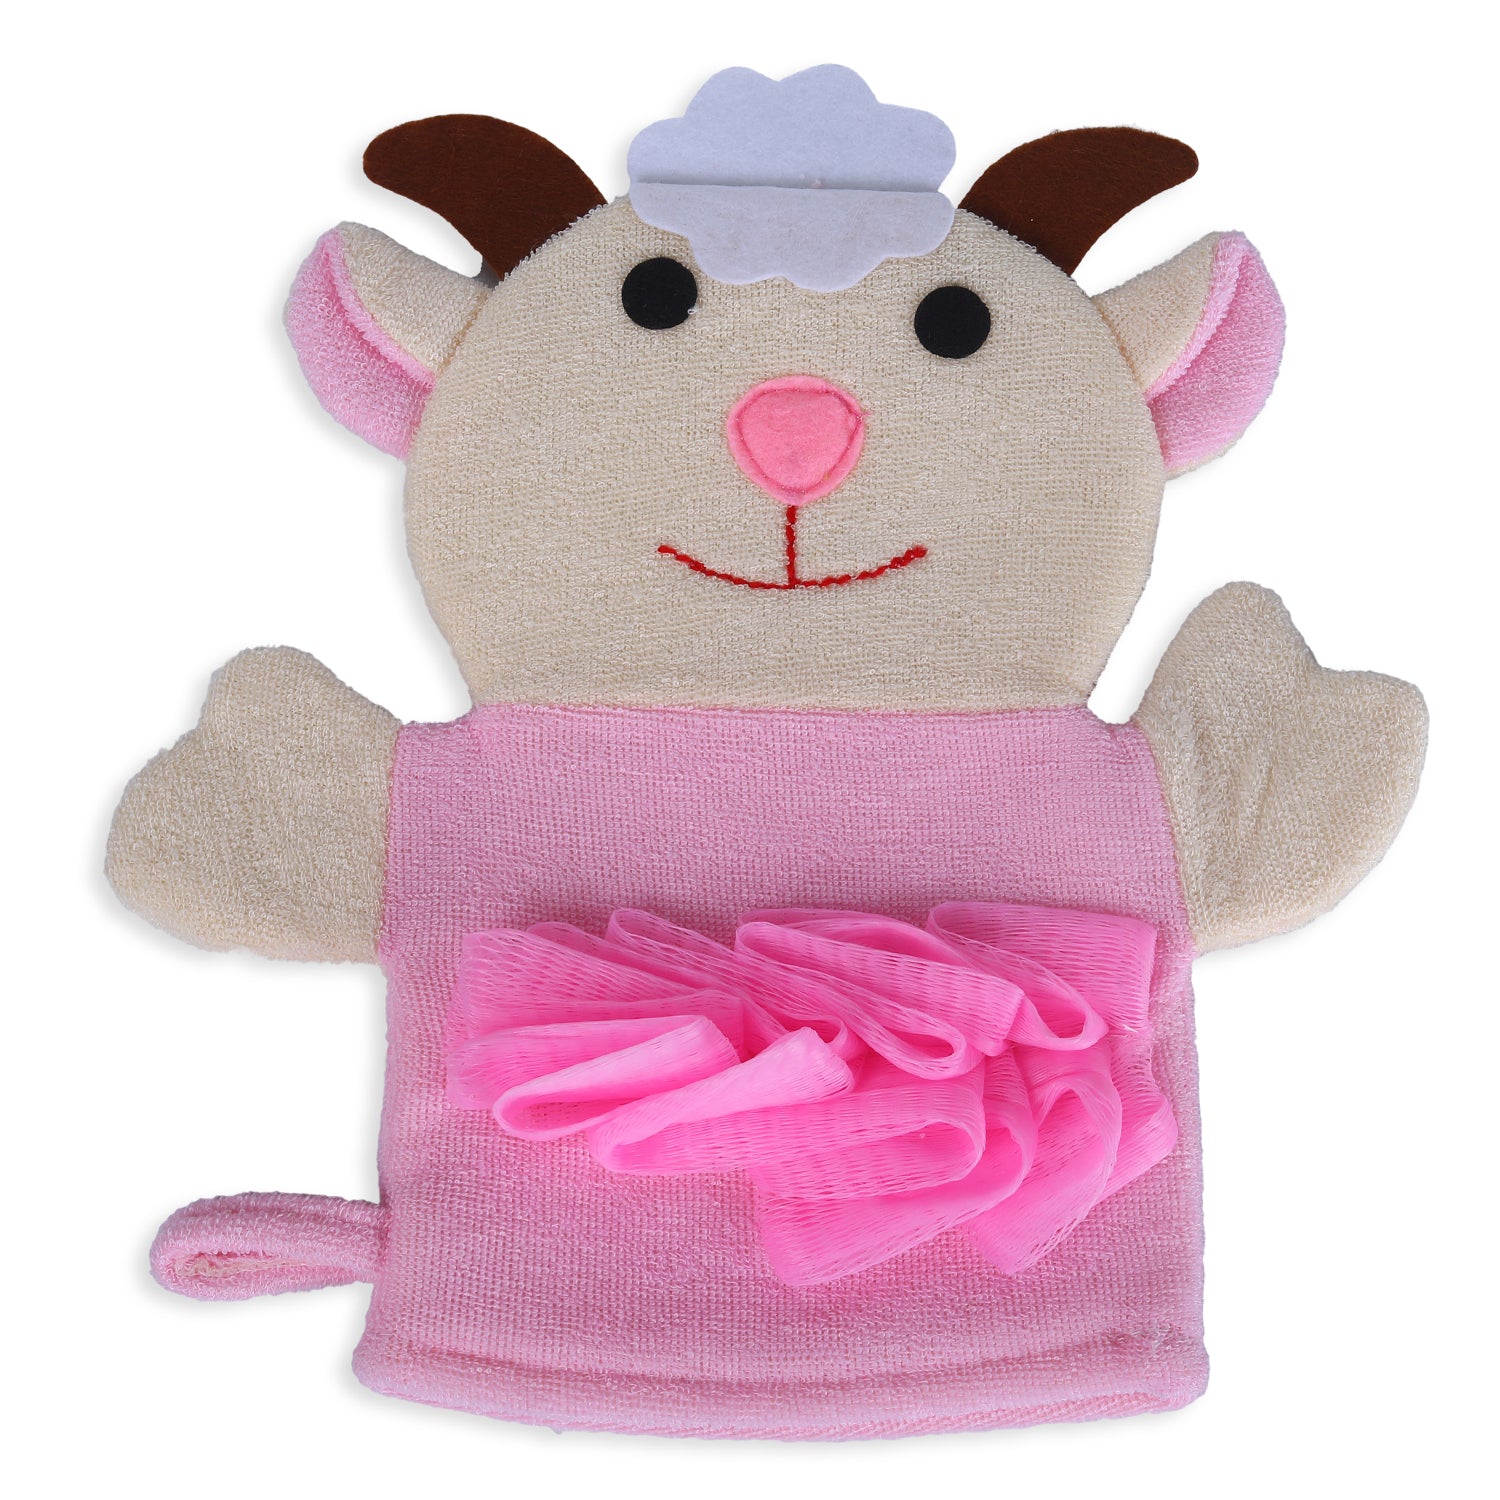 Baby Moo Sweet Cow Bath Time Fun Hand Puppet Loofah Bath Glove - Cream